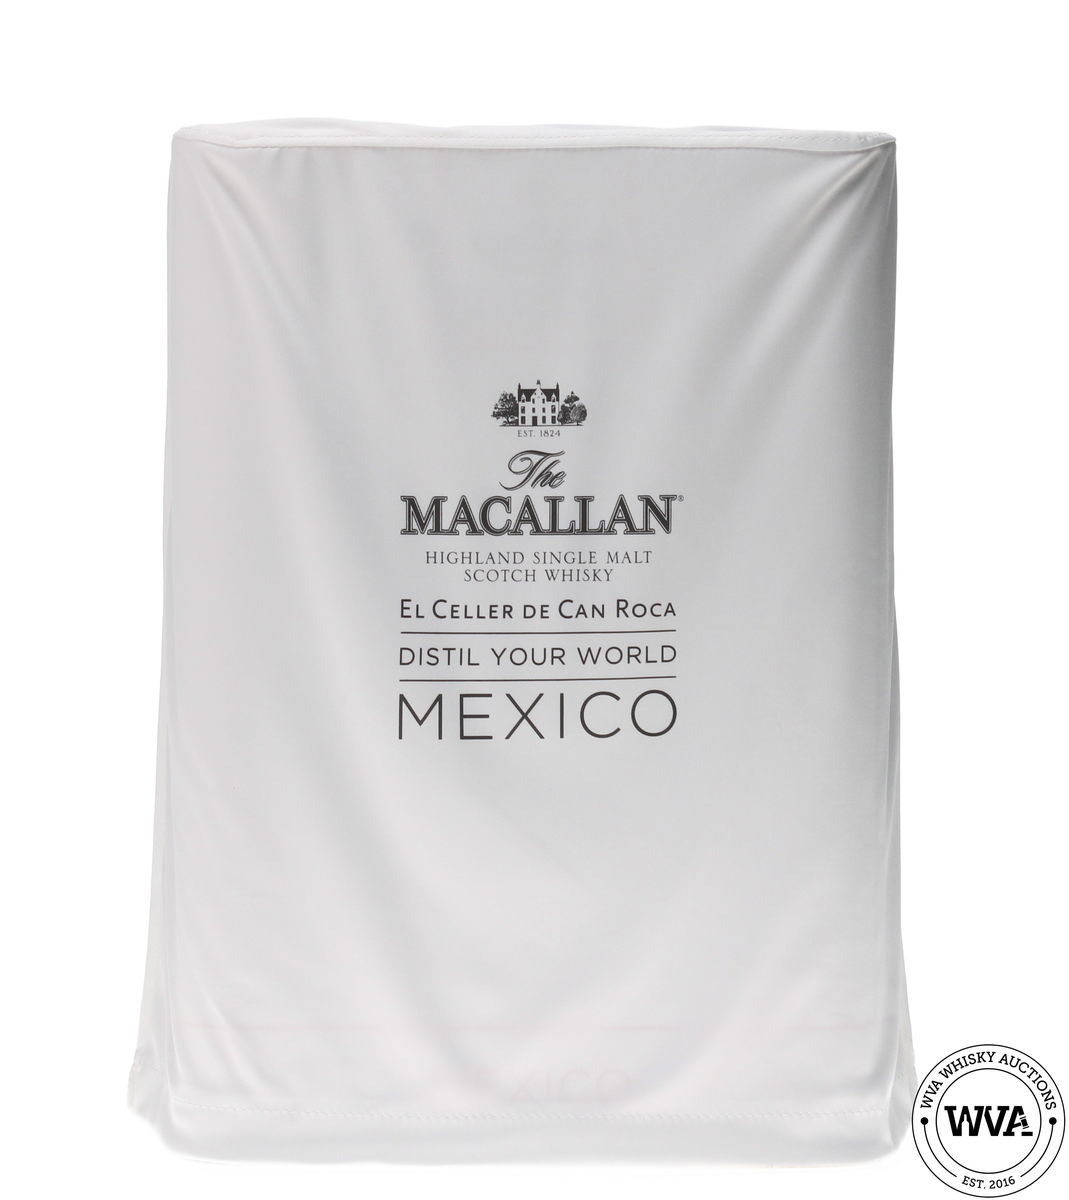 MACALLAN - DISTIL YOUR WORLD - MEXICO EDITION